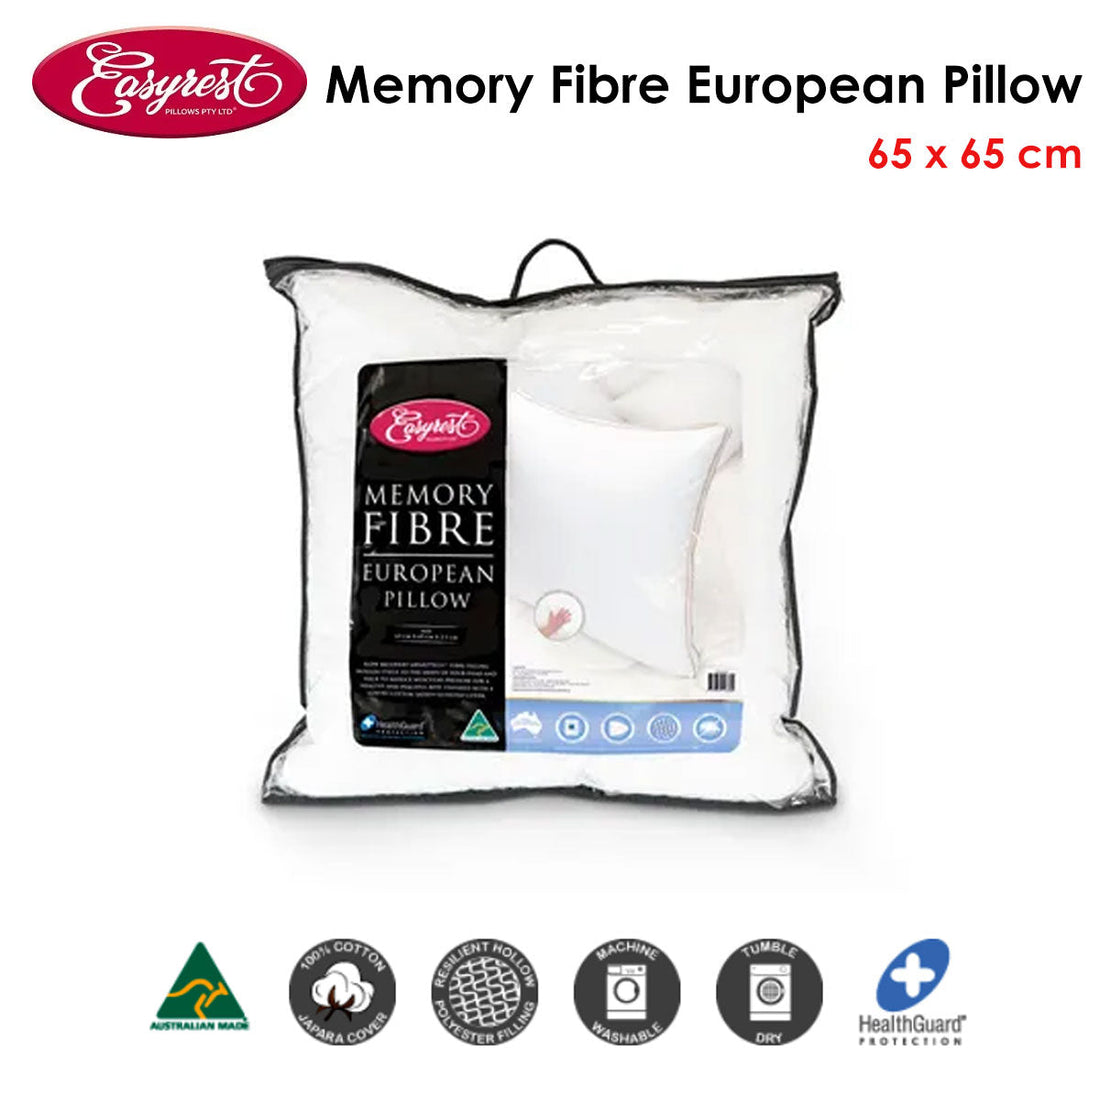 Memory Fibre European Pillow 65 x 65 cm